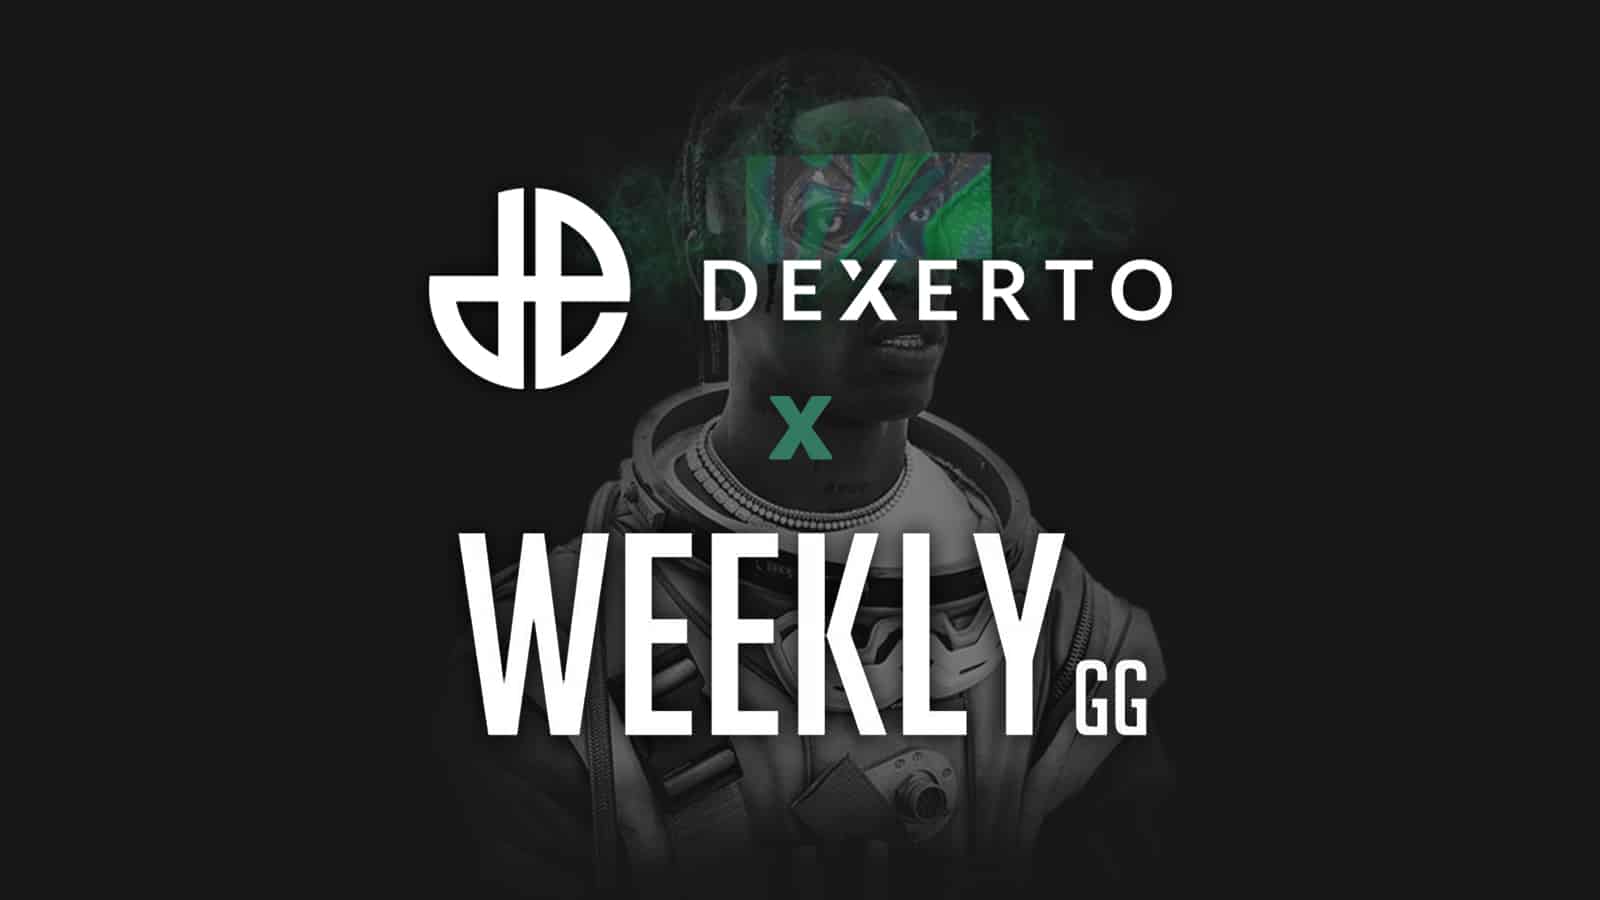 Dexerto acquires Weekly.gg